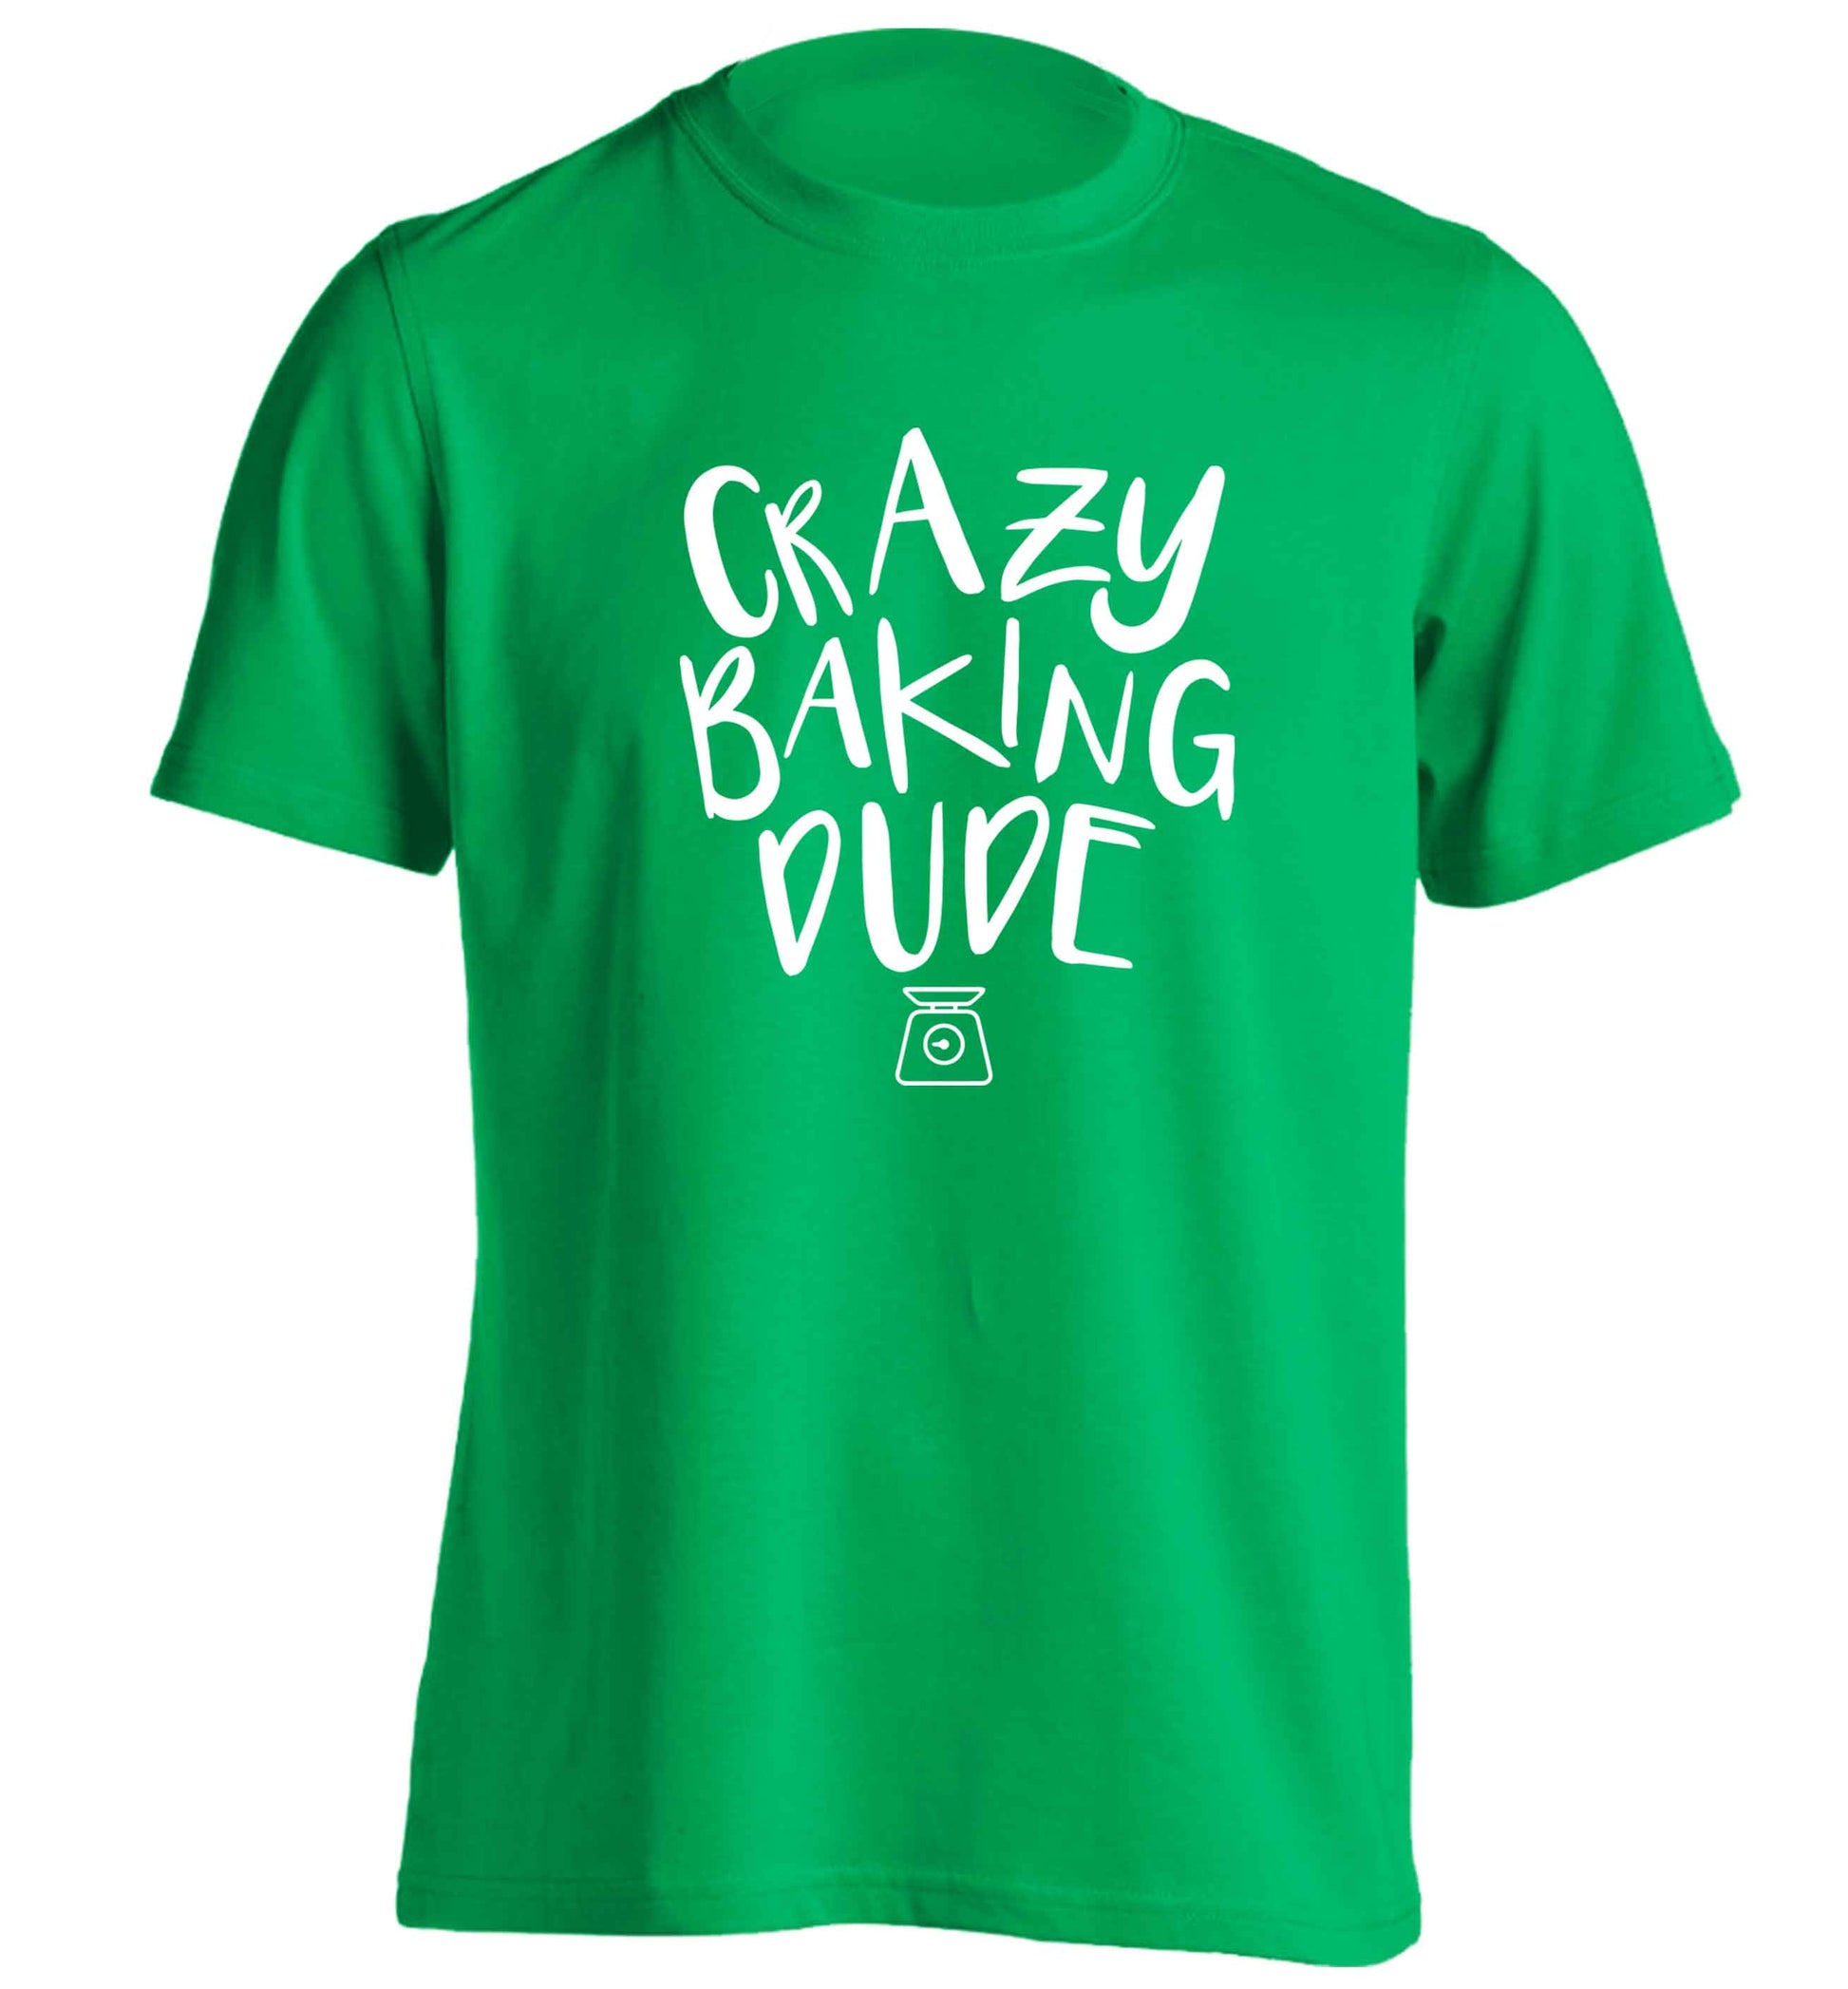 Crazy baking dude adults unisex green Tshirt 2XL